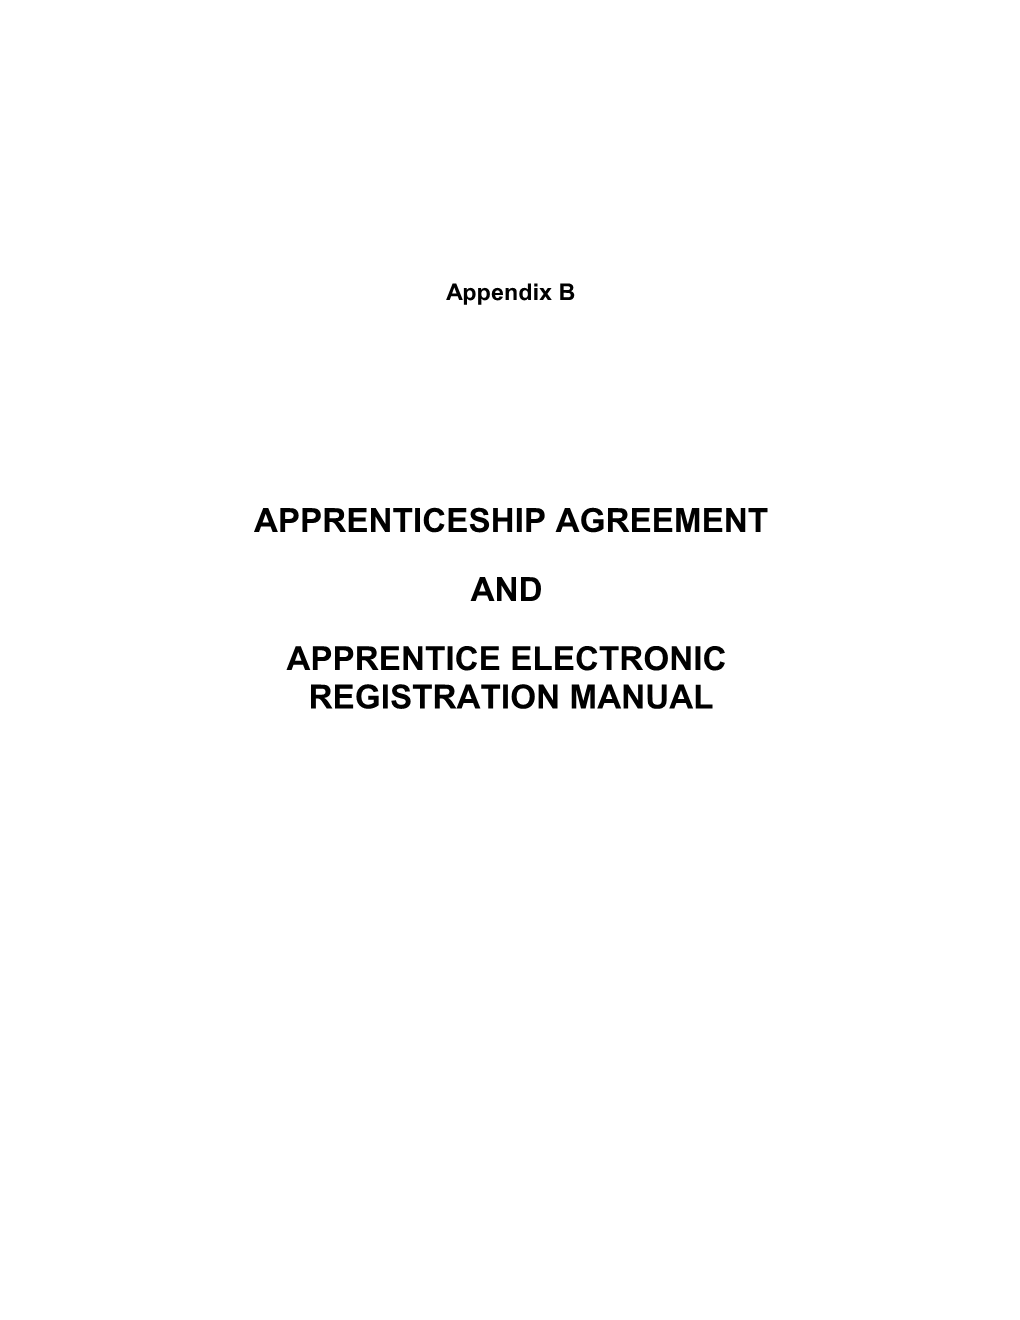 Apprenticeship Agreement